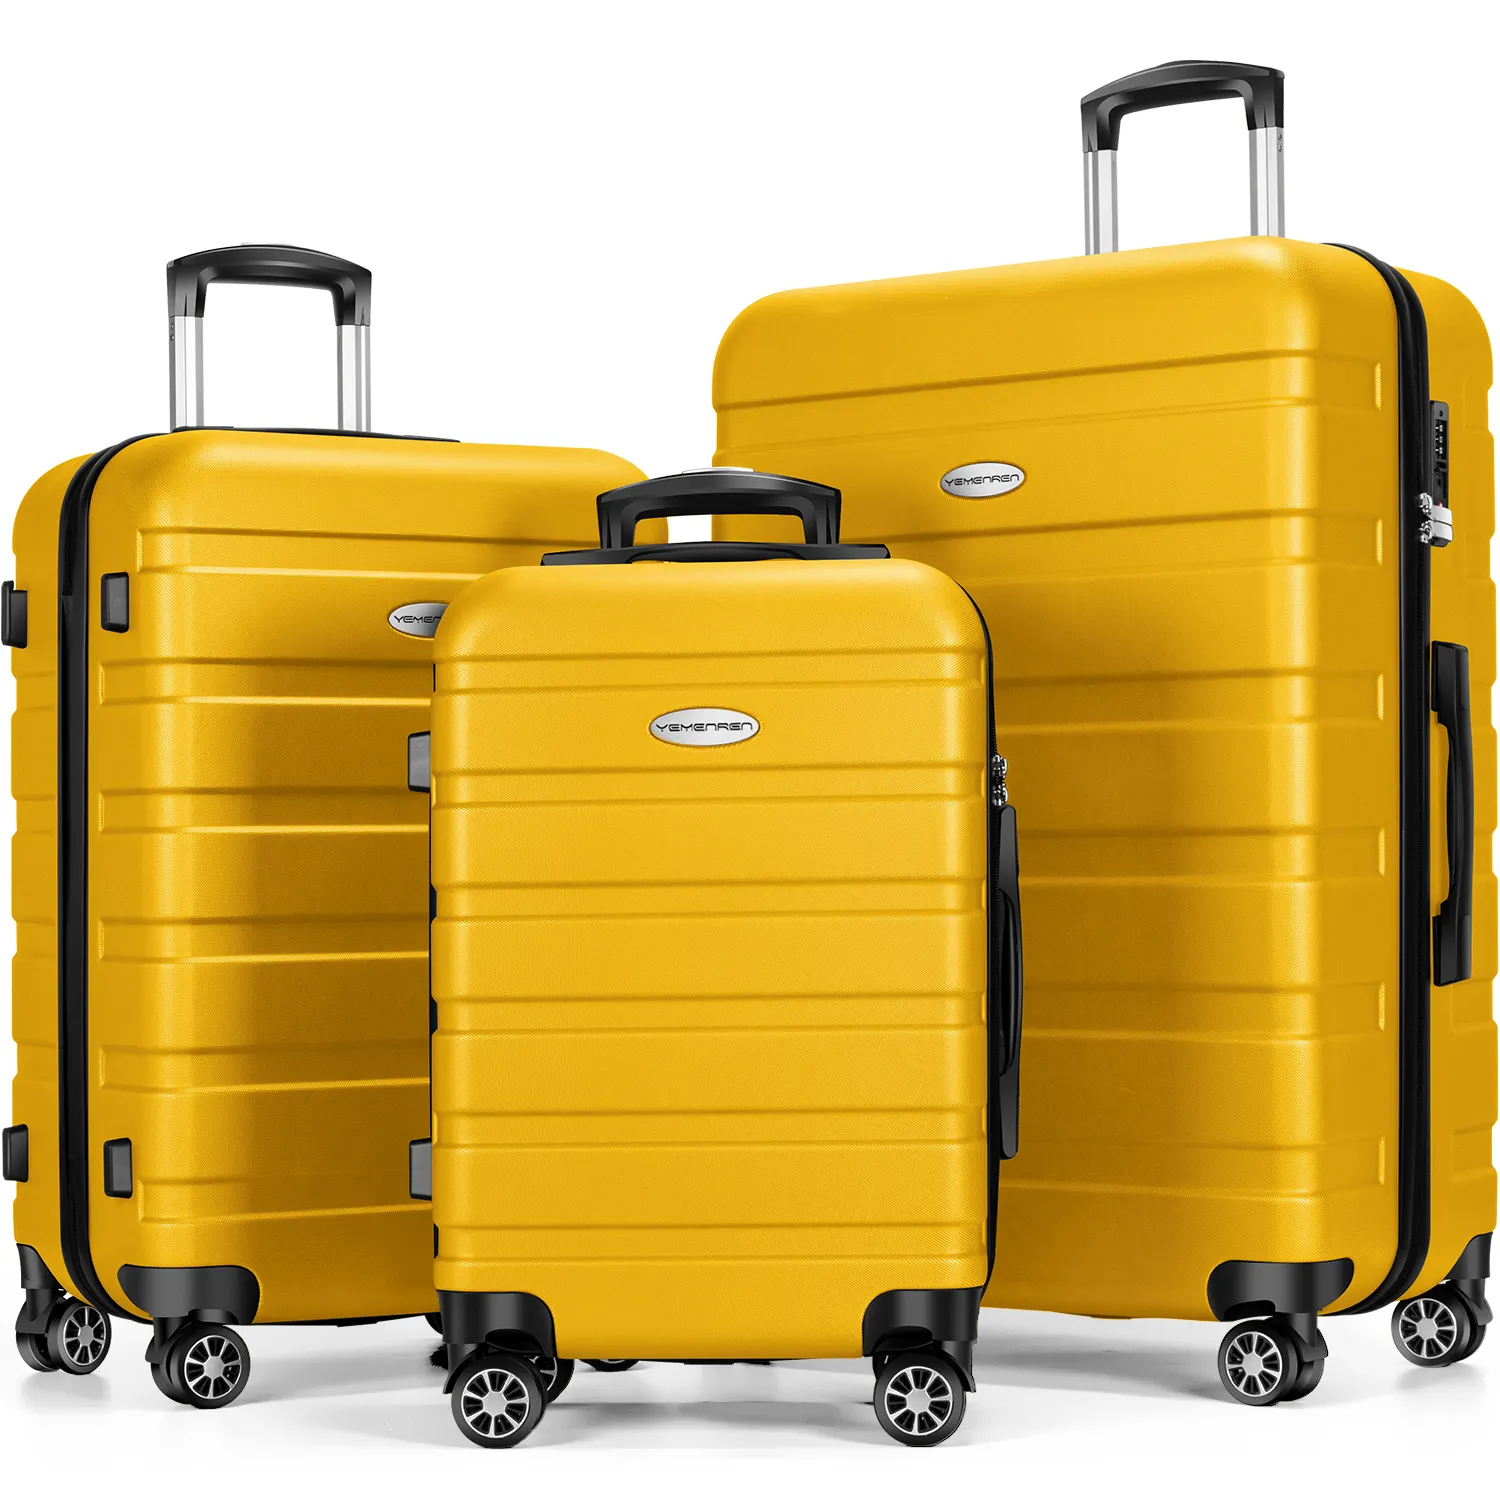 ABS set valigie 3 pezzi trolley borse da viaggio vendita calda valigia 28 pollici TSA lucchetto valigia bagagli uomo donna